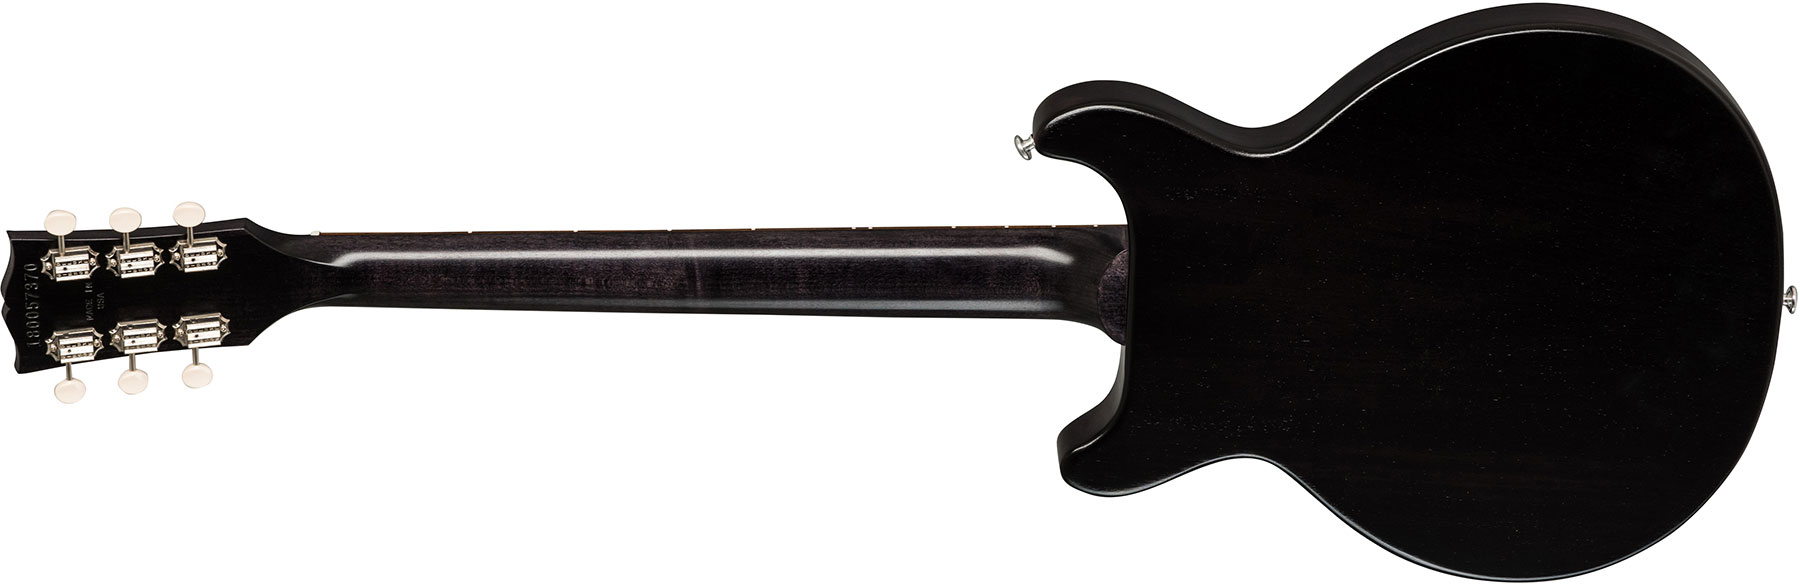 Gibson Les Paul Junior Dc Tribute 2019 P90 Ht Rw - Worn Ebony - Single cut electric guitar - Variation 2